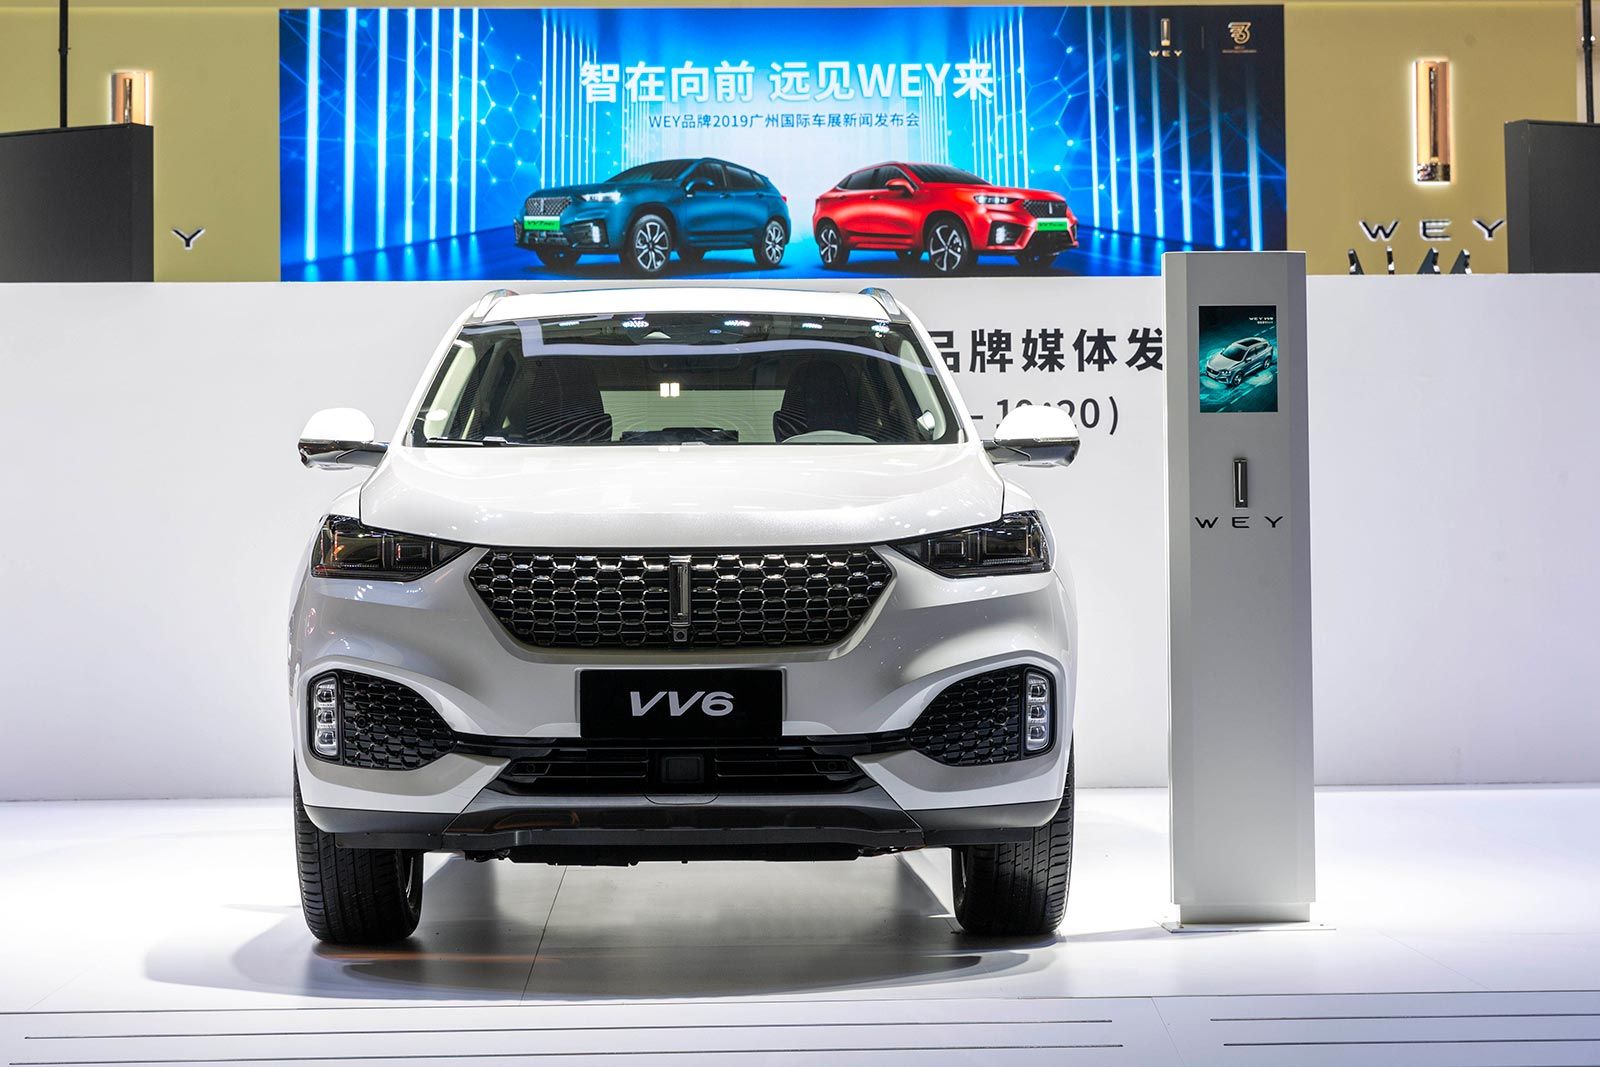 VV7 PHEV产品系列领衔中国豪华SUV阵营 重磅登陆2019广州车展